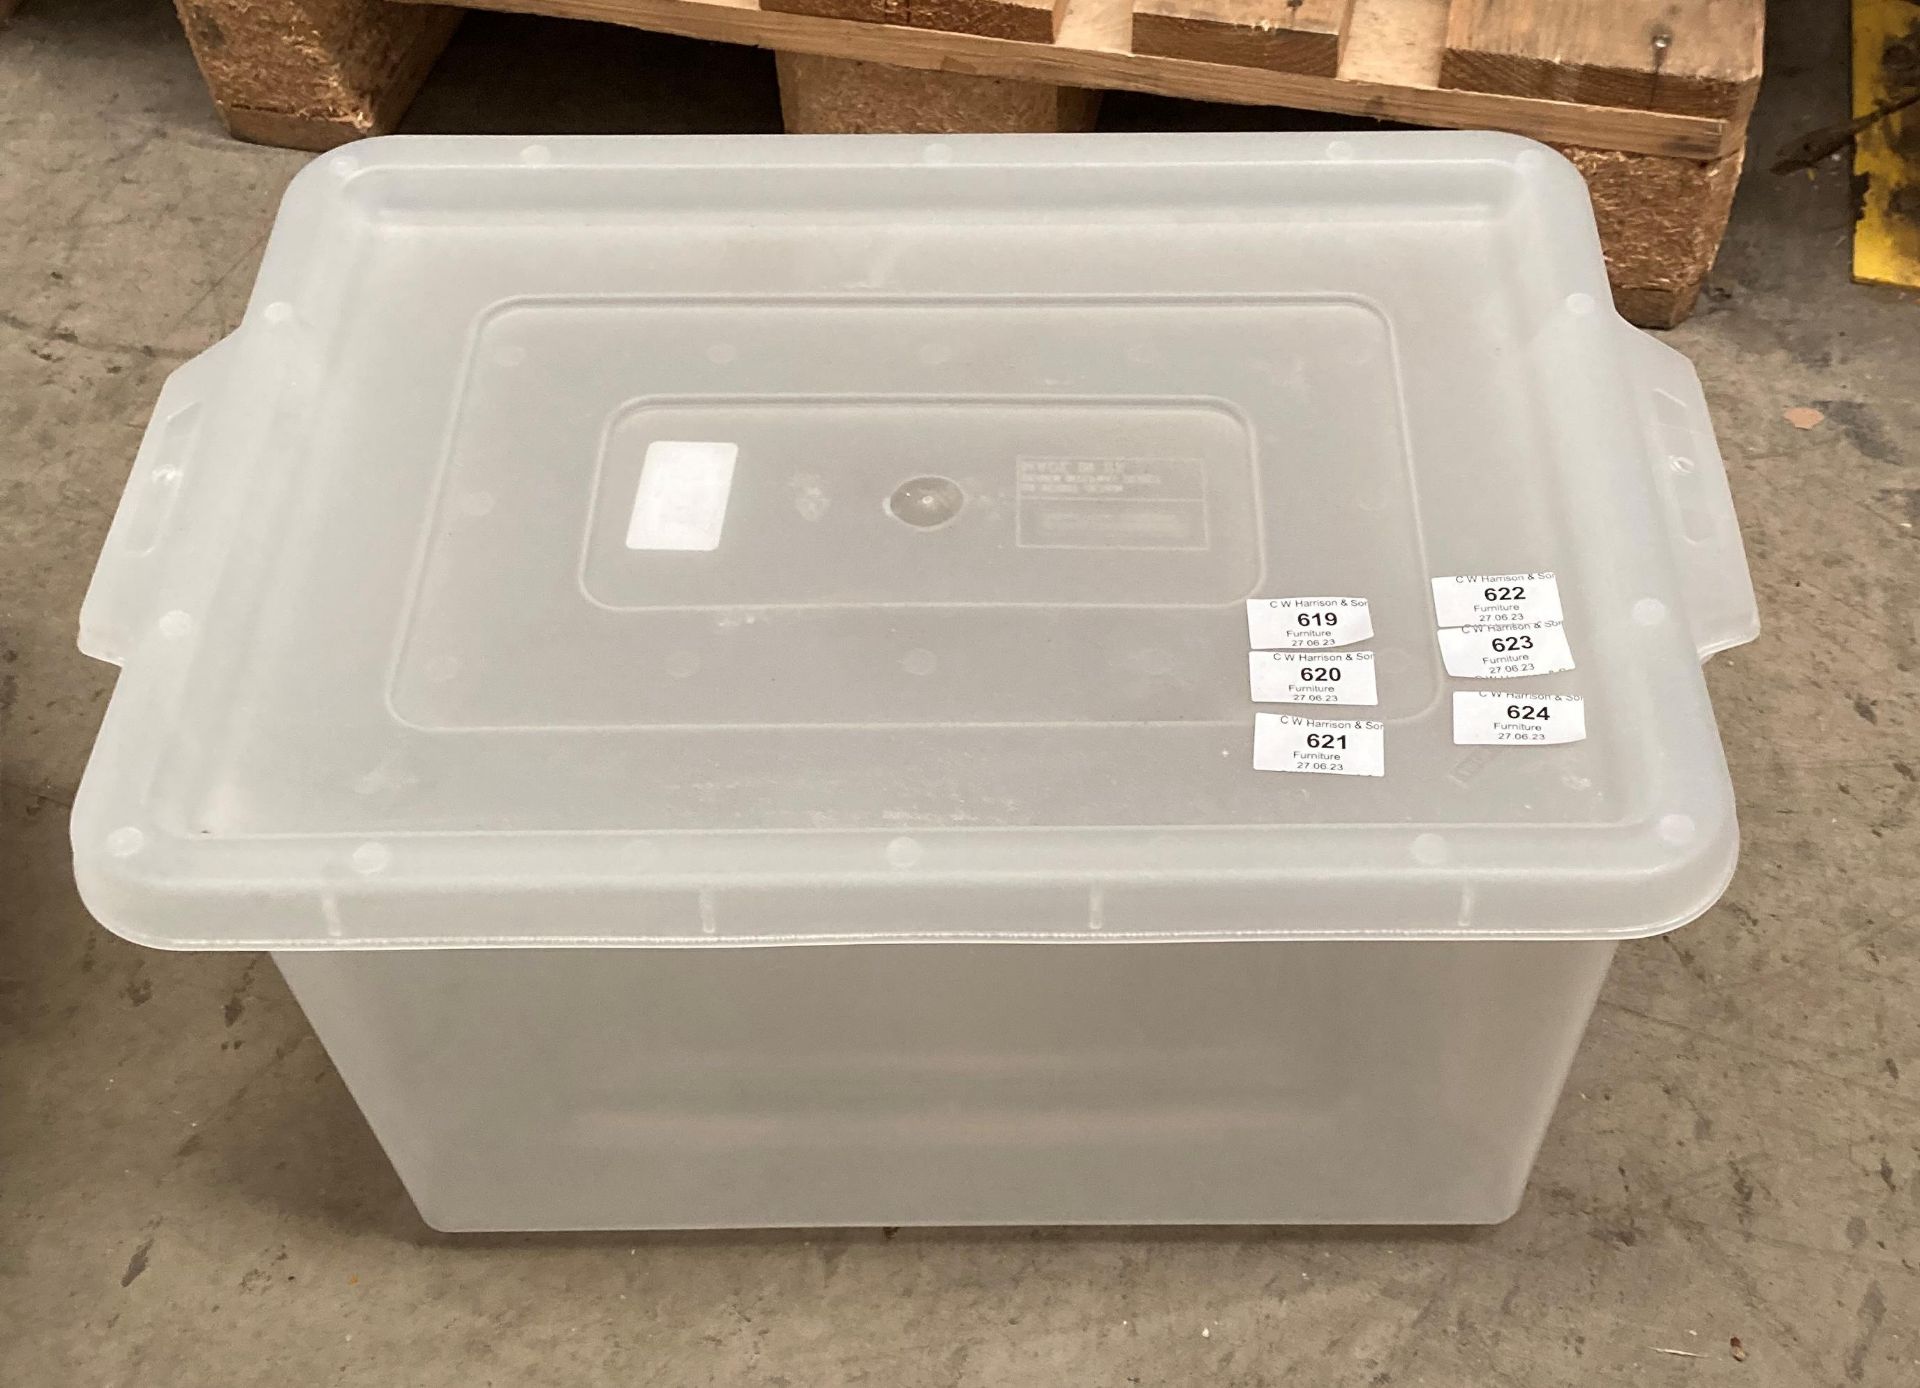 20 x clear plastic 30 litre storage boxes with lids,